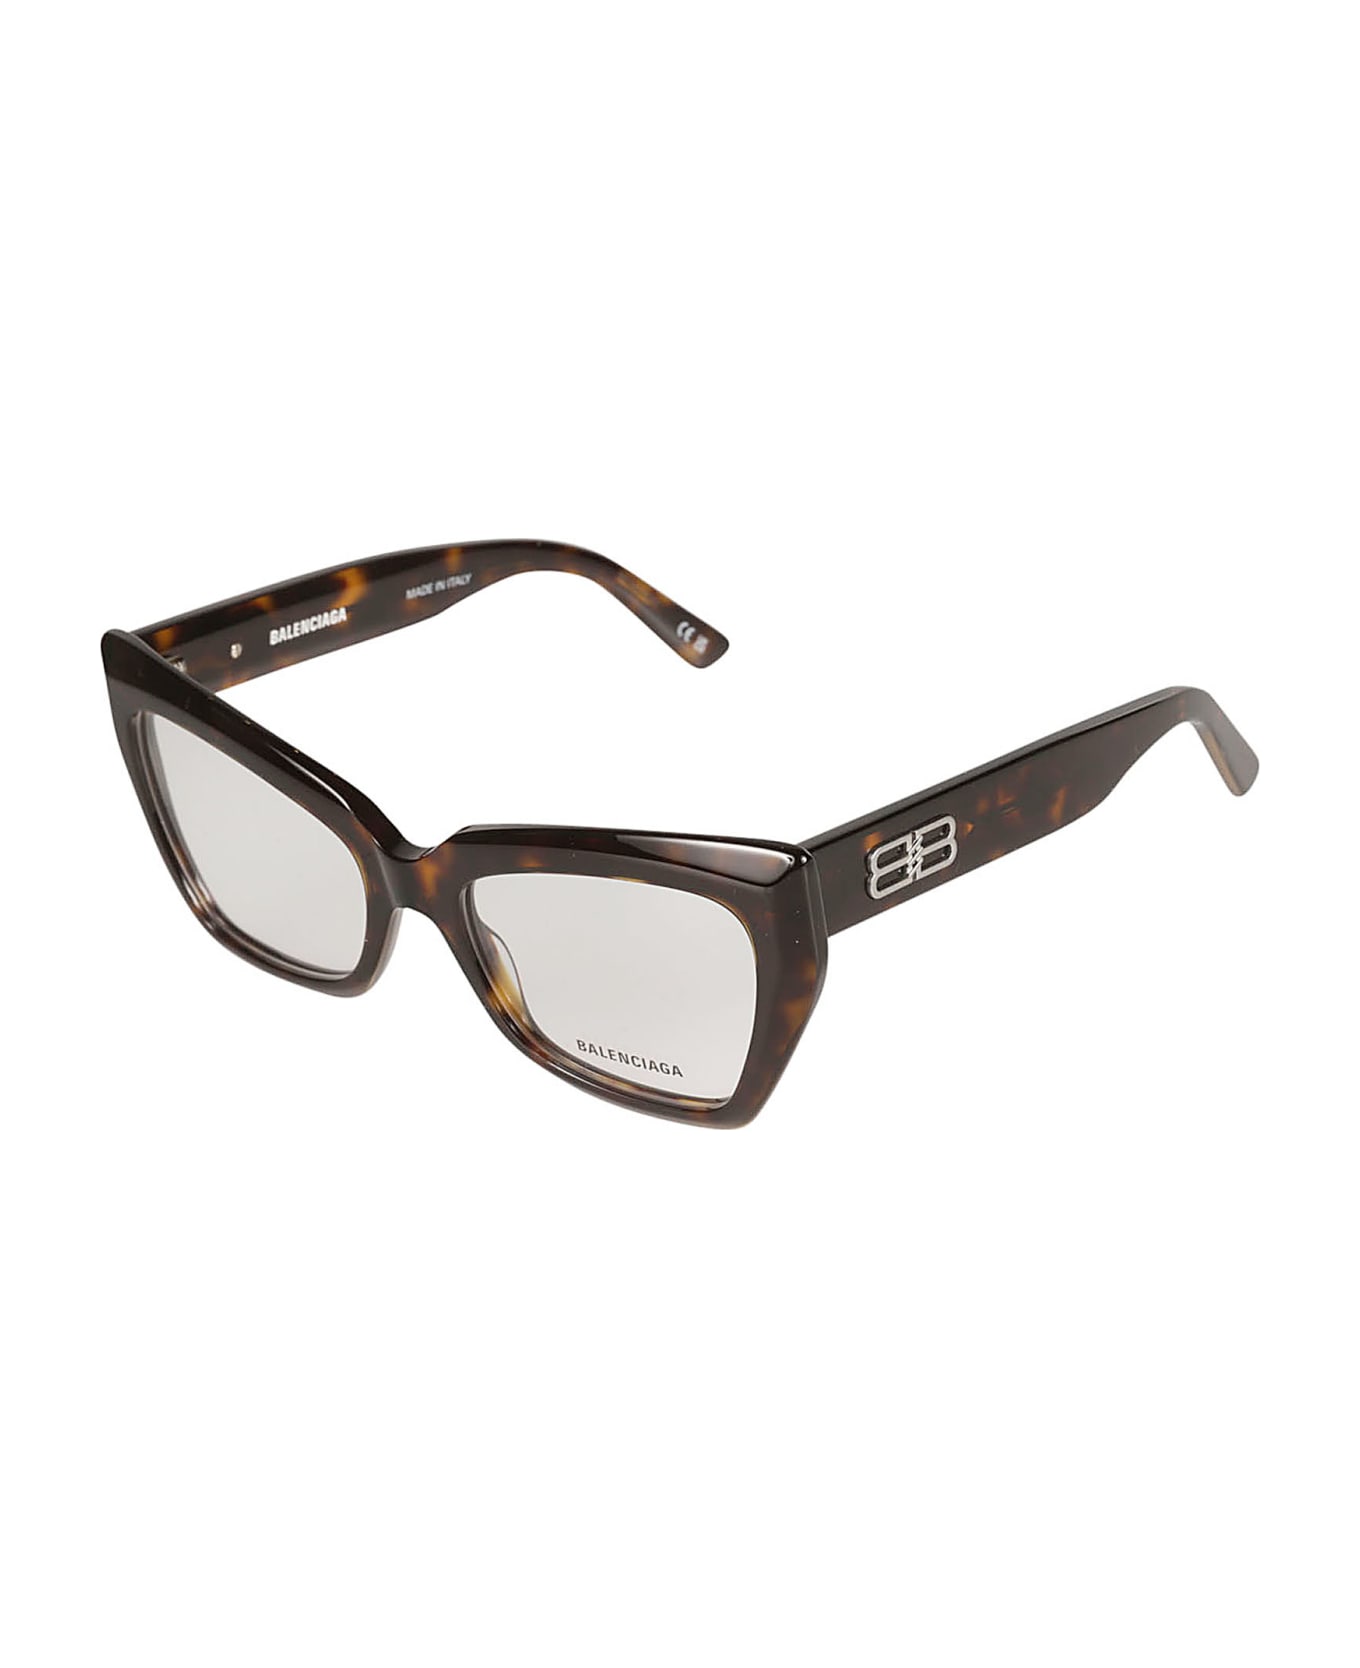 Balenciaga Eyewear Bb Plaque Square Frame Glasses - Havana/Transparent